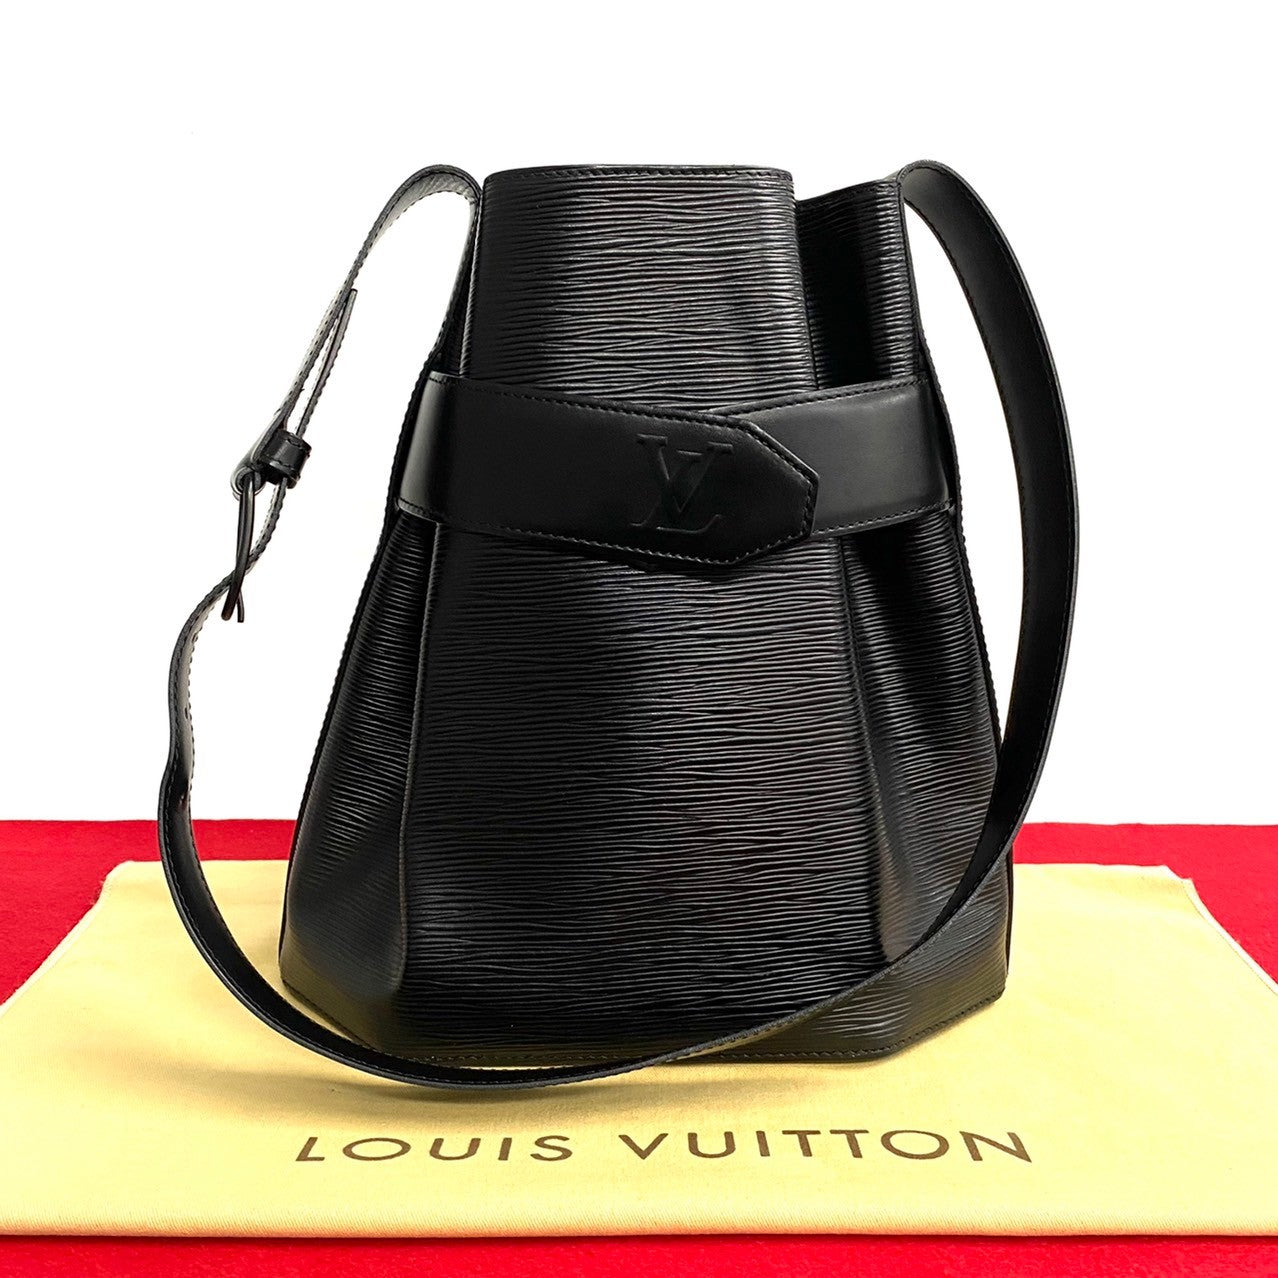 Louis Vuitton Sac DePaul GM Leather Shoulder Bag M80155 in Excellent condition